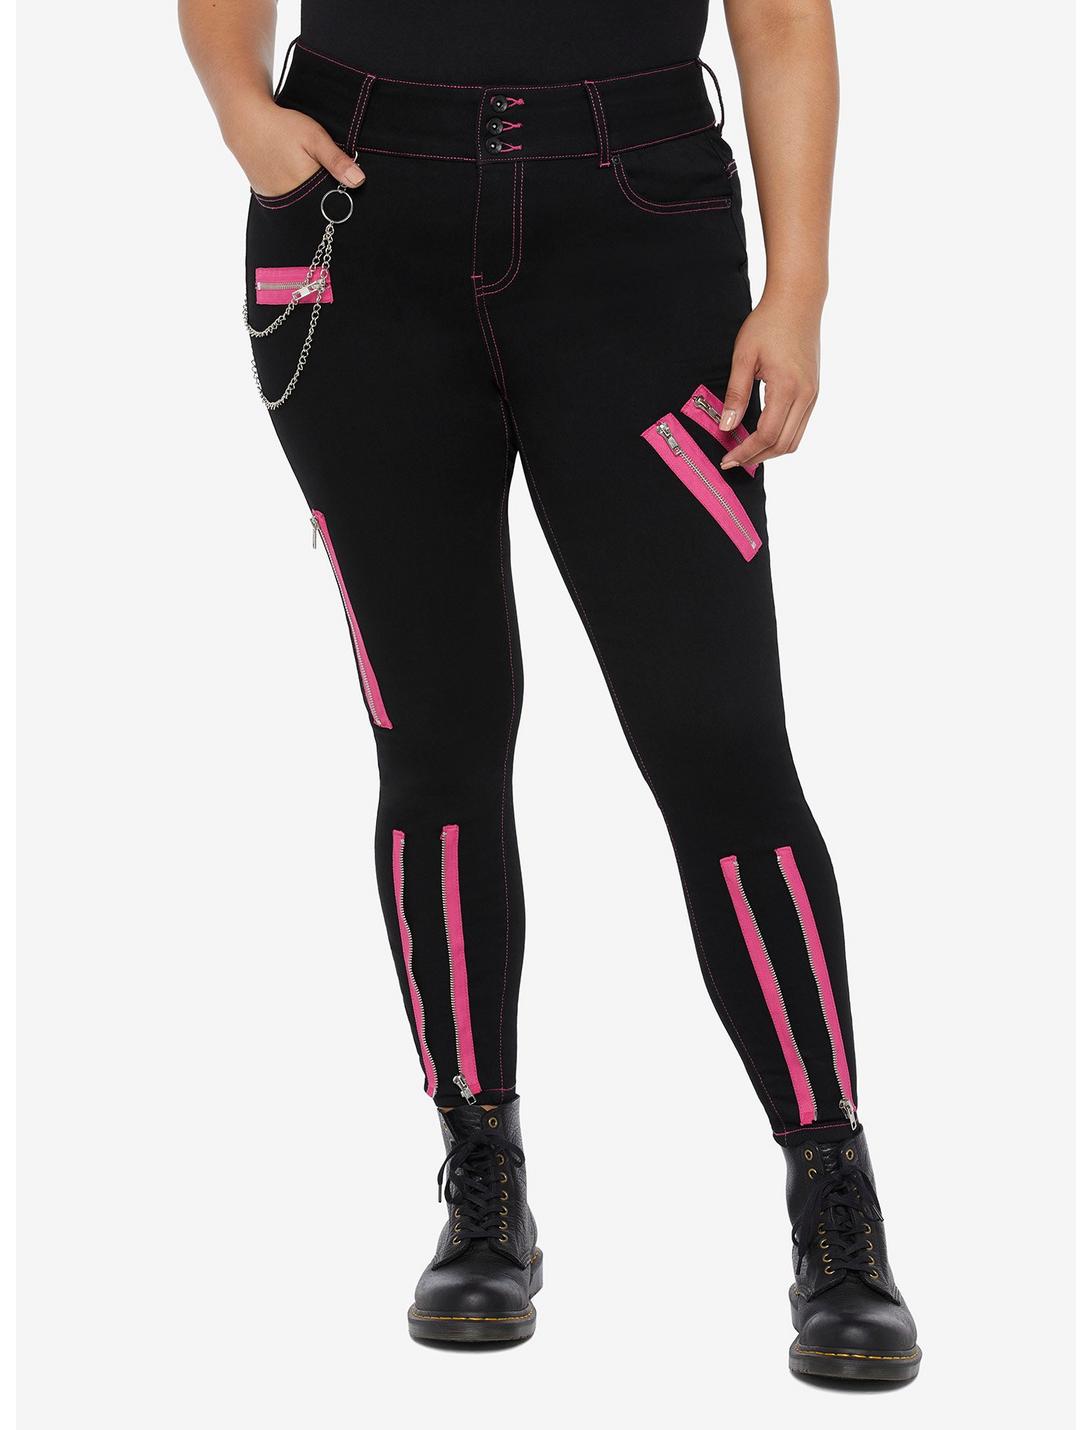 Black & Pink Zipper Super Skinny Jeans Plus Size, BLACK  PINK, hi-res